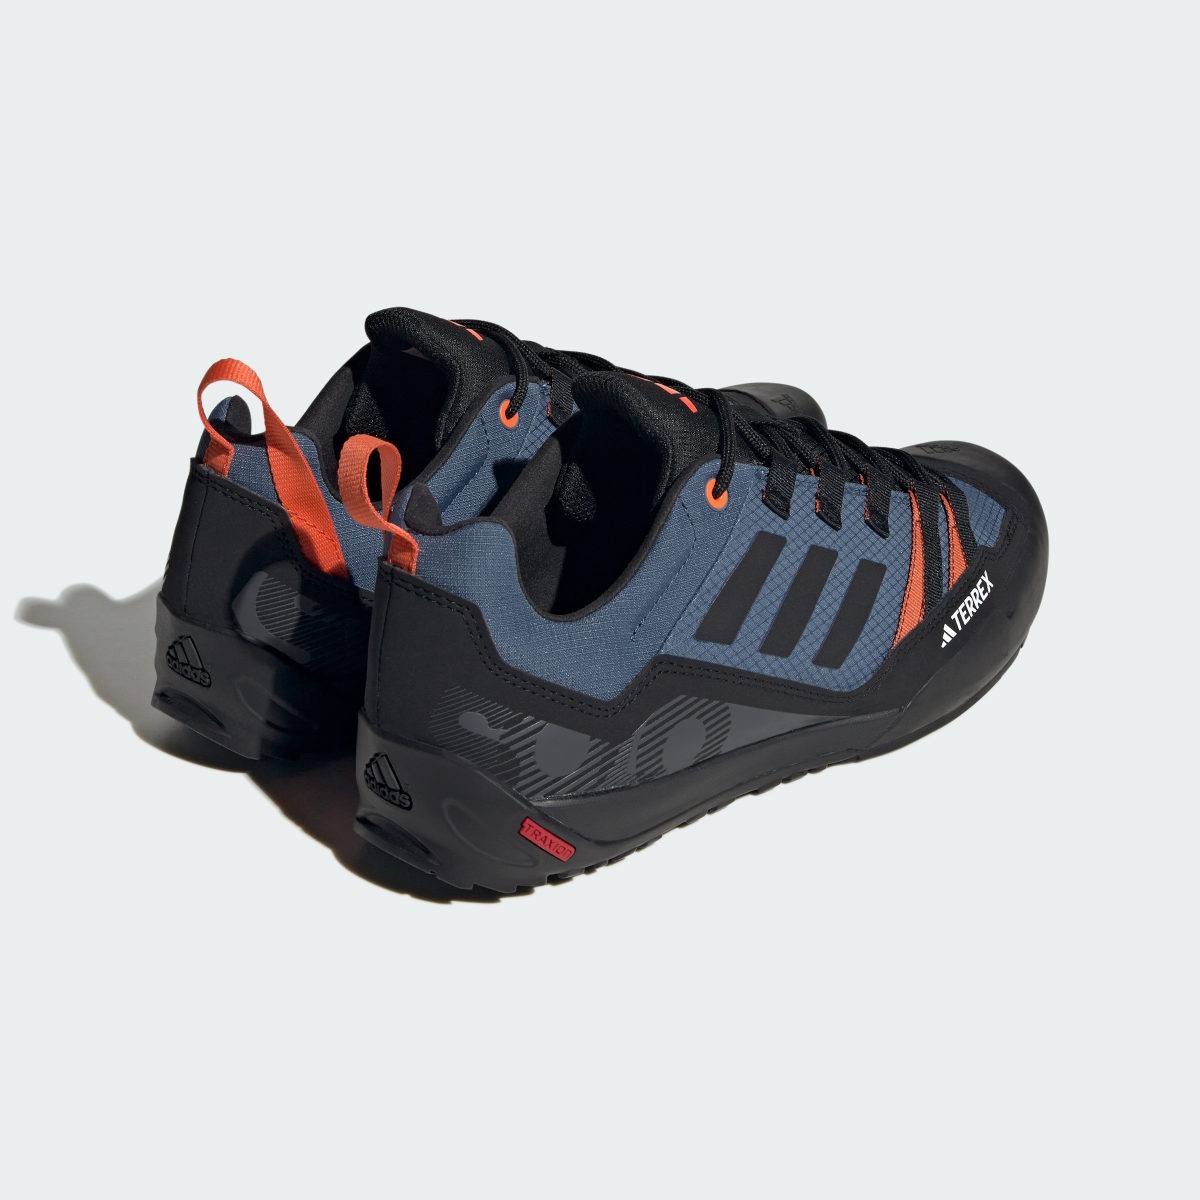 Adidas Chaussure de randonnée Terrex Swift Solo 2.0. 6